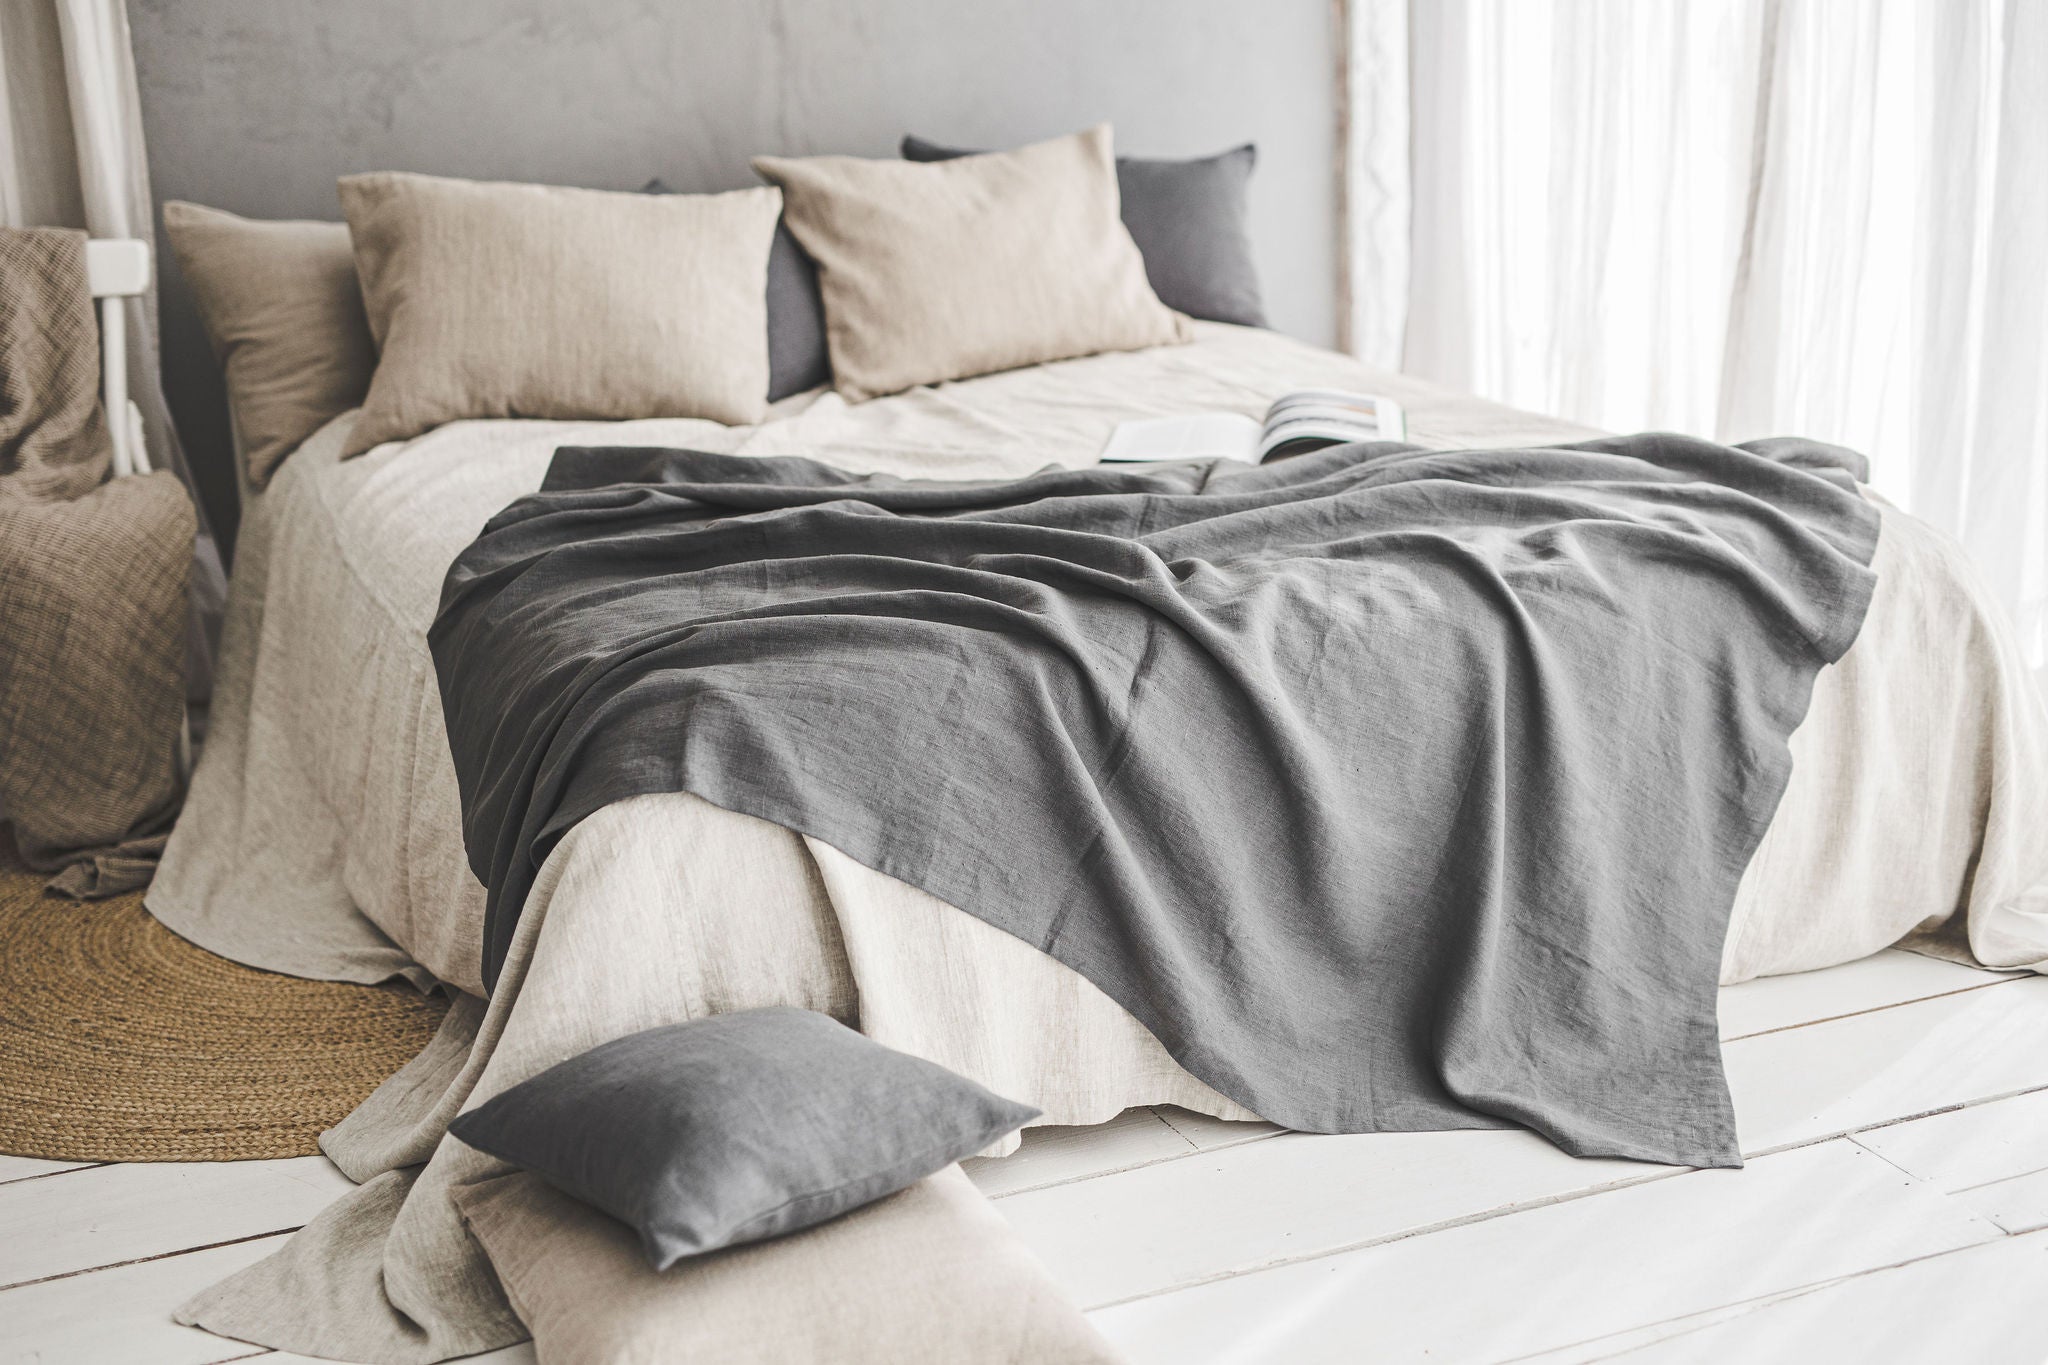 Charcoal gray linen throw blanket